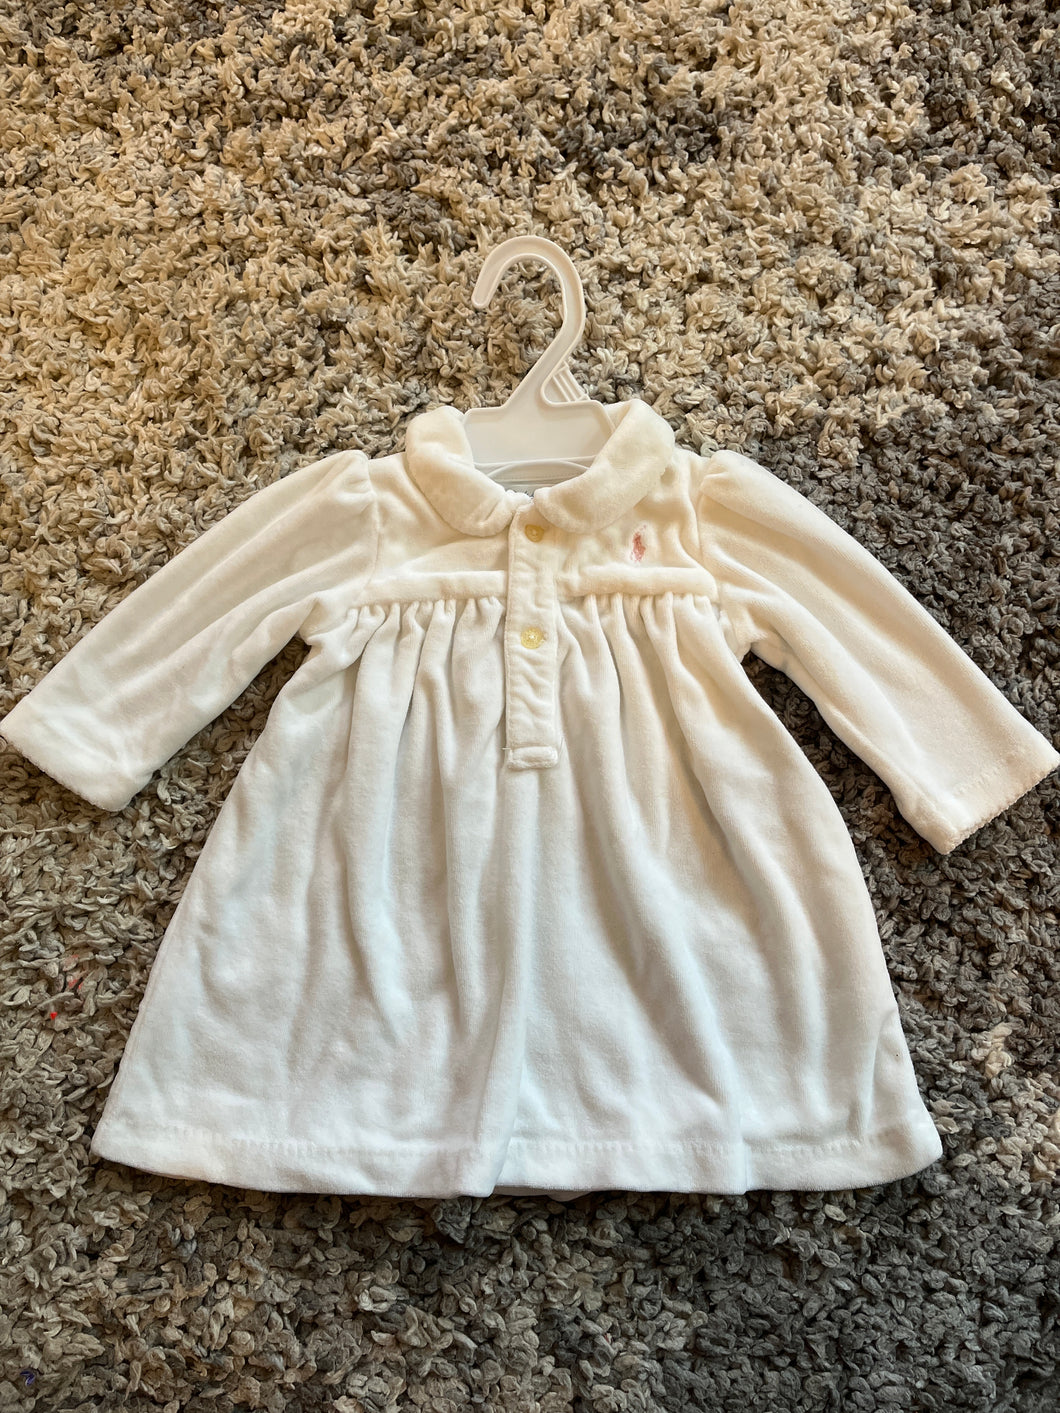 Ralph Lauren white velour dress size 6 months  6 months